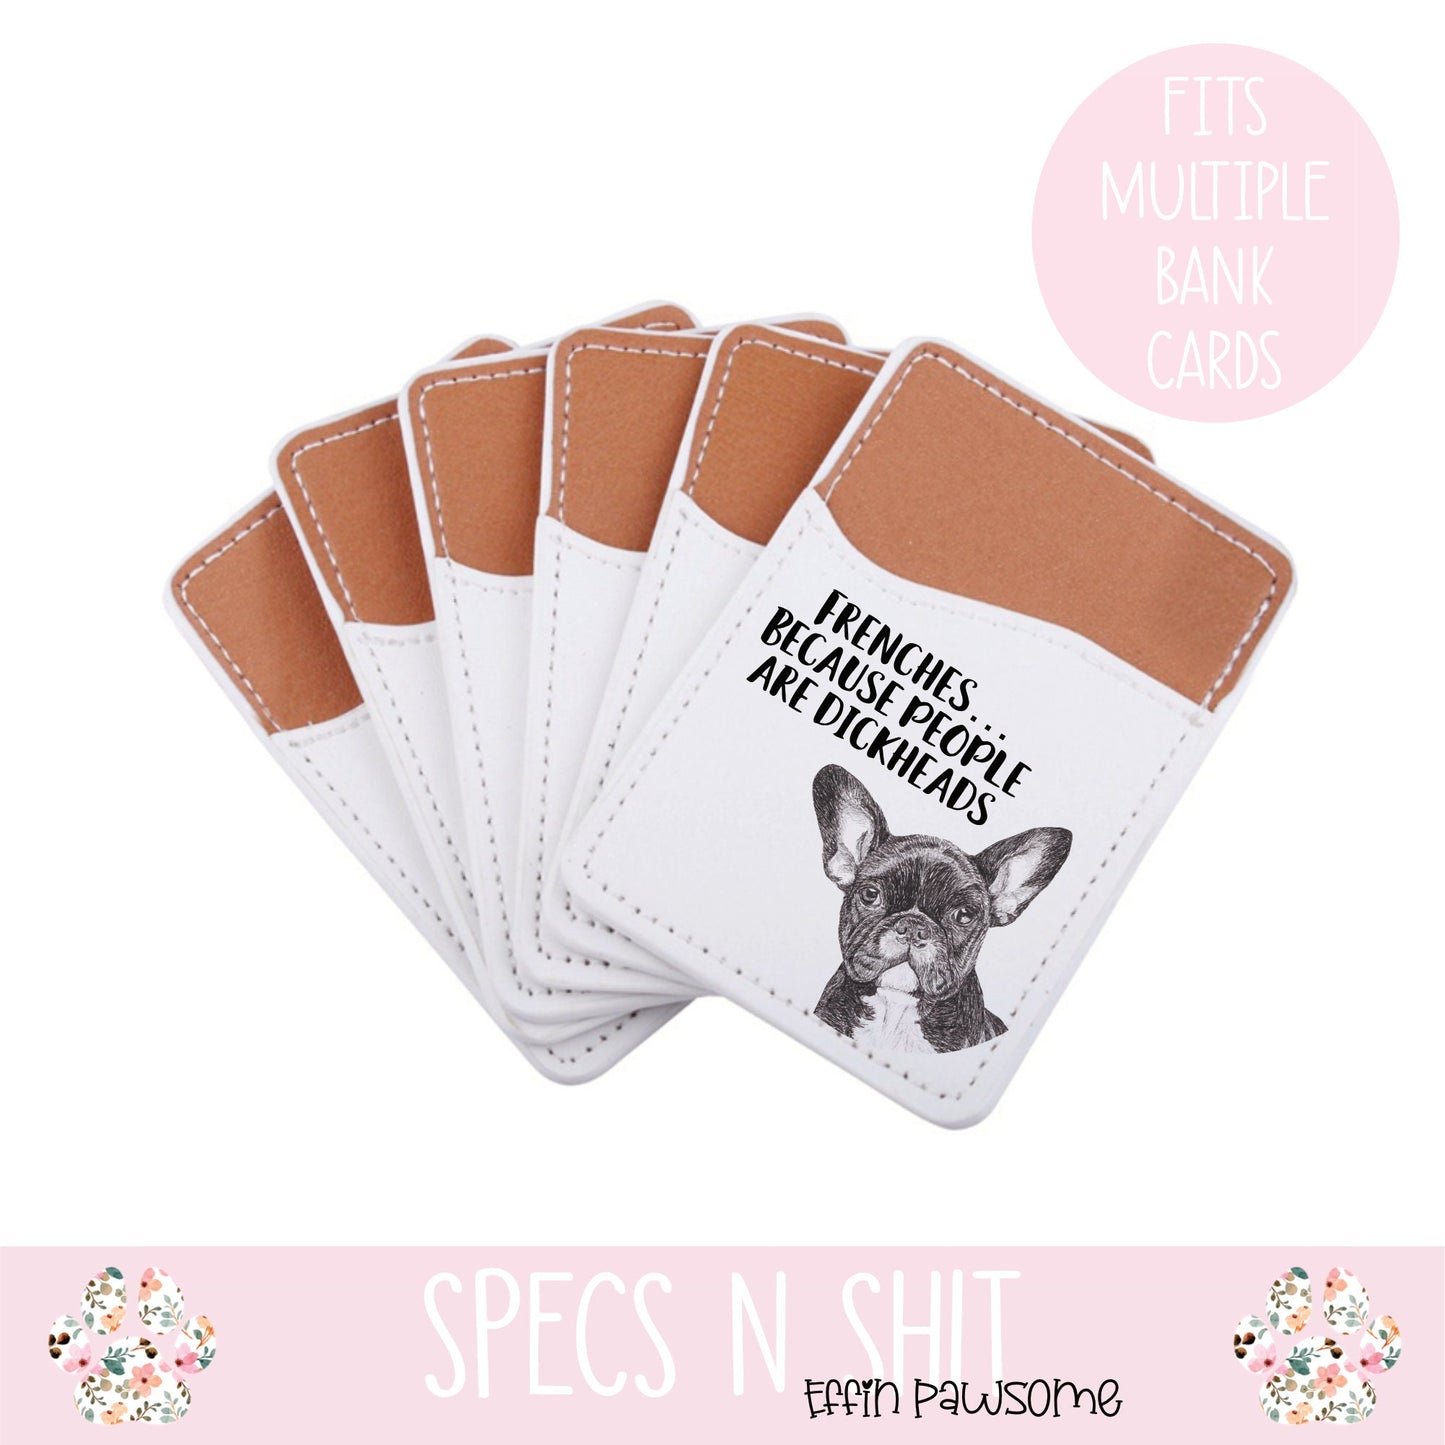 Funny Dog Phone Case Wallet | Mum Gift | Dad Gift | Phone Storage | iPhone | Cash Wallet | Dog Gift Idea | Funny Phone Case | Novelty Gift